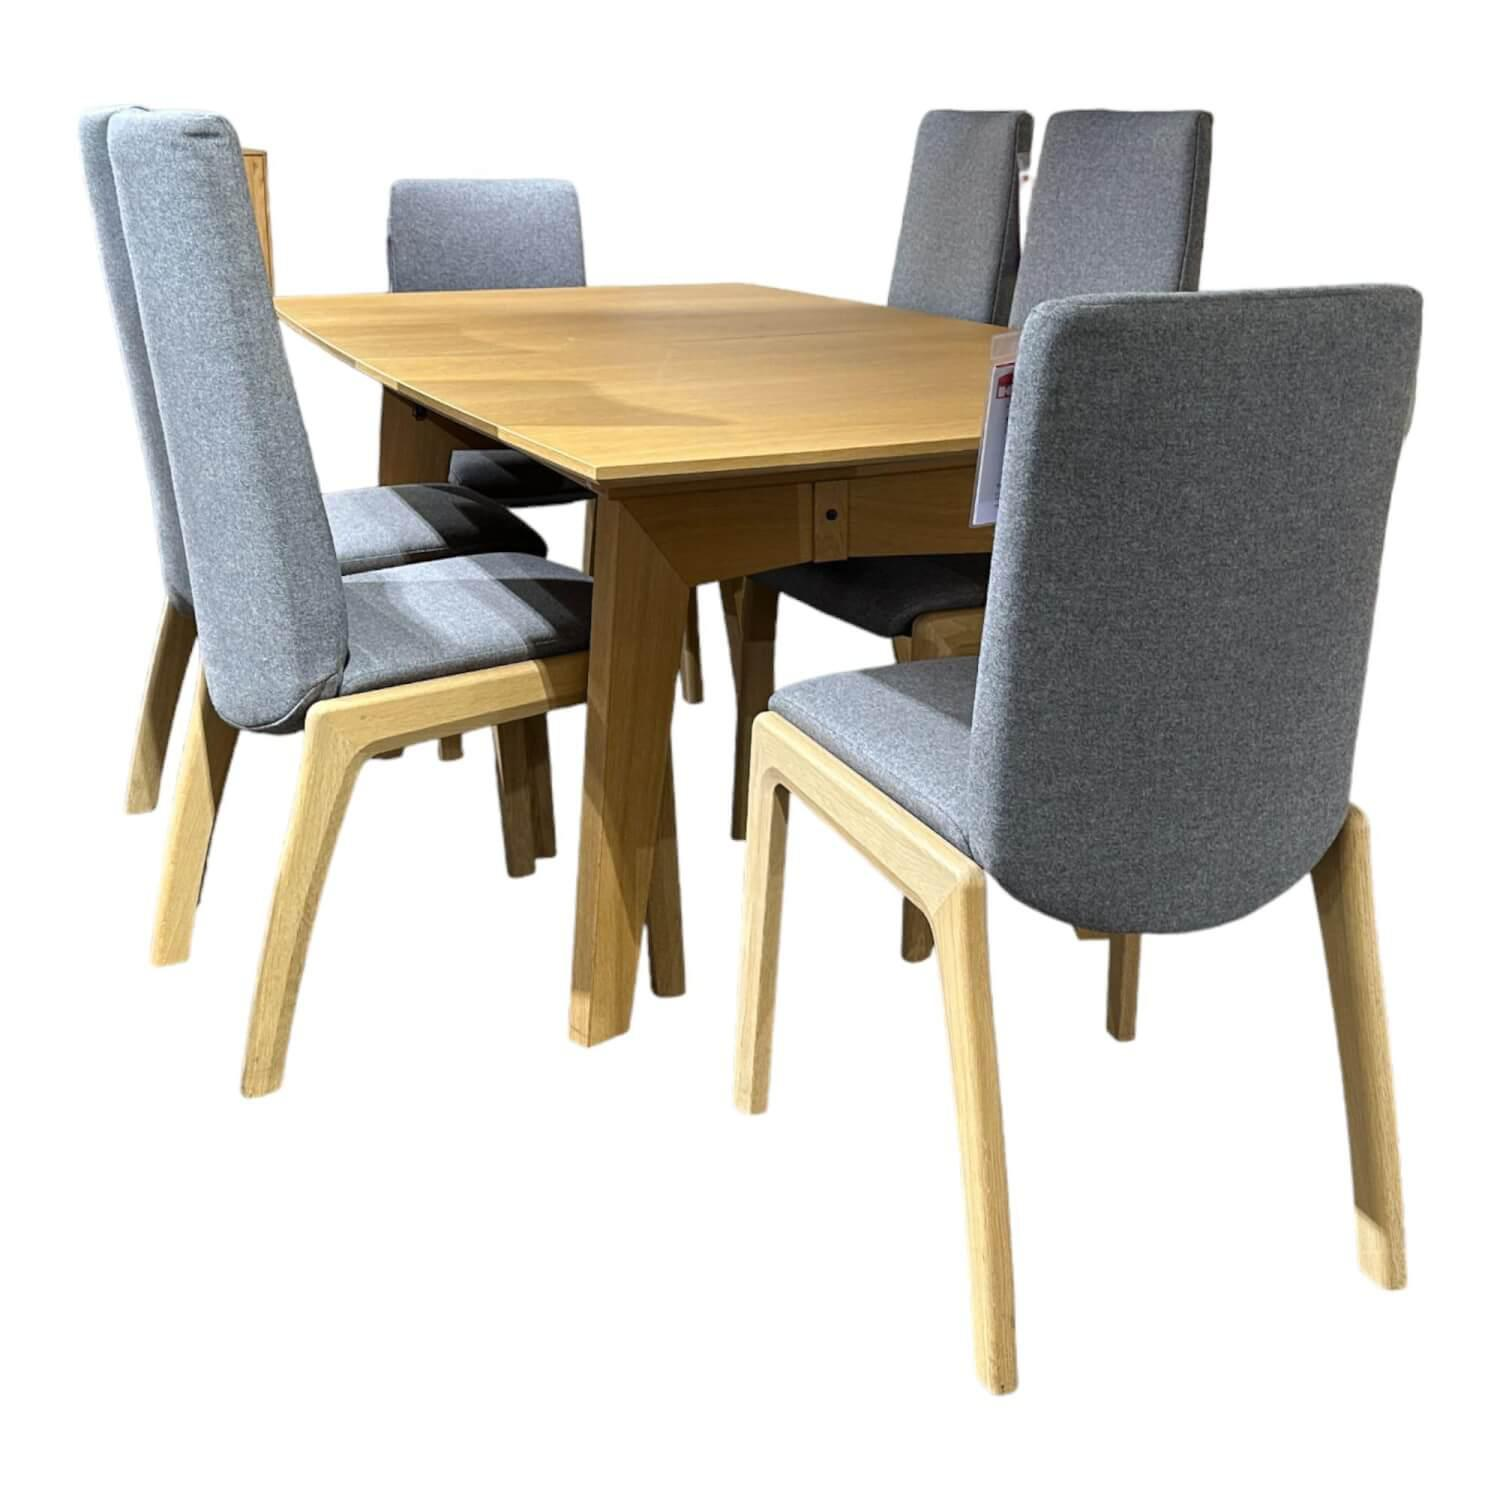 Essgruppe Tisch Toscana T200 Oak Nature Stühle Laurel Chair Low D100 M Bezug Stoff Light Grey